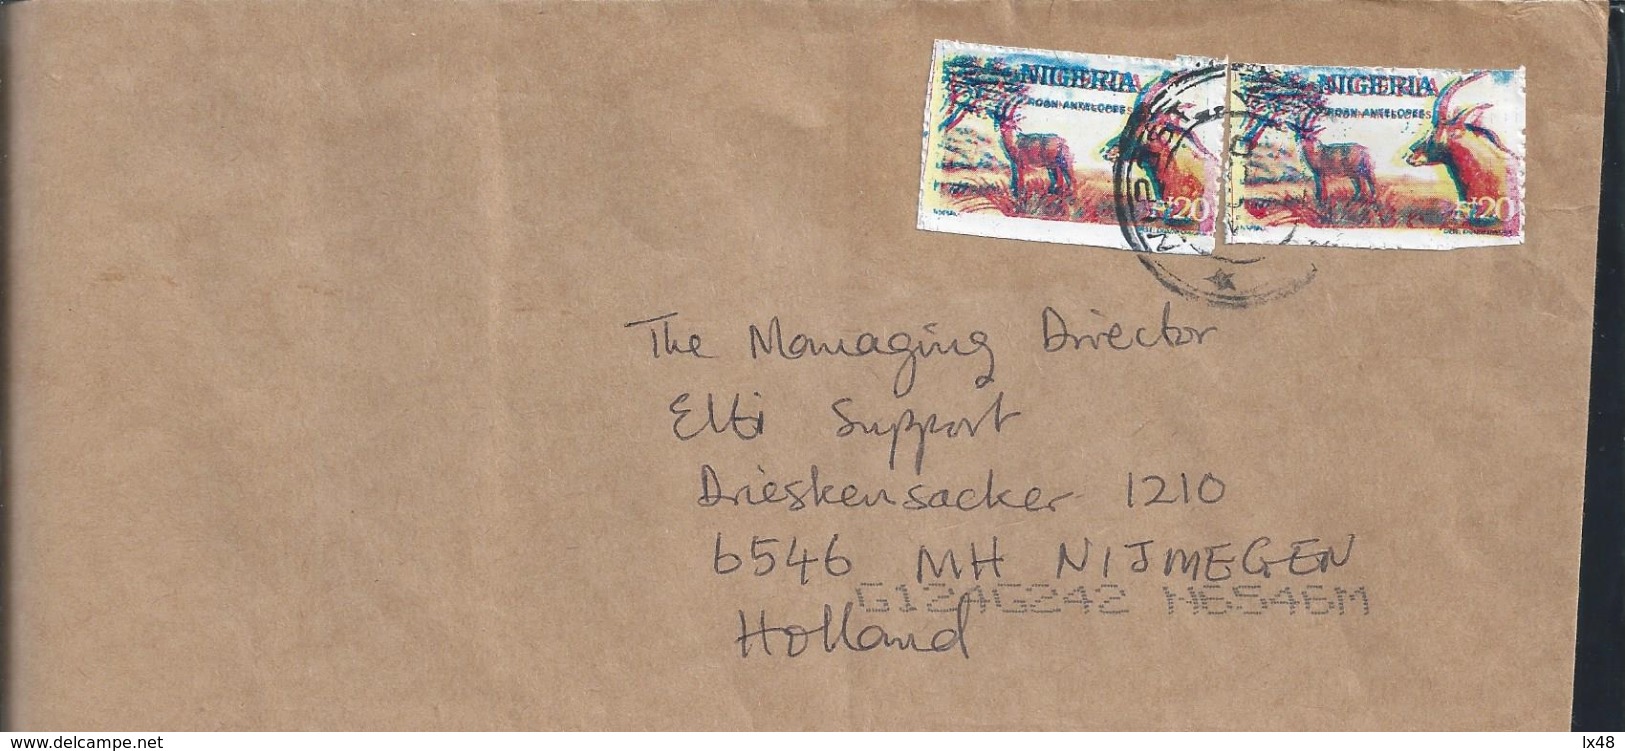 Stamps Double Impression Nigeria. Antelope Addax Sahara. Bovideo. Ruminant Mammal. Briefmarken Doppeldruck Nigeria. - Other